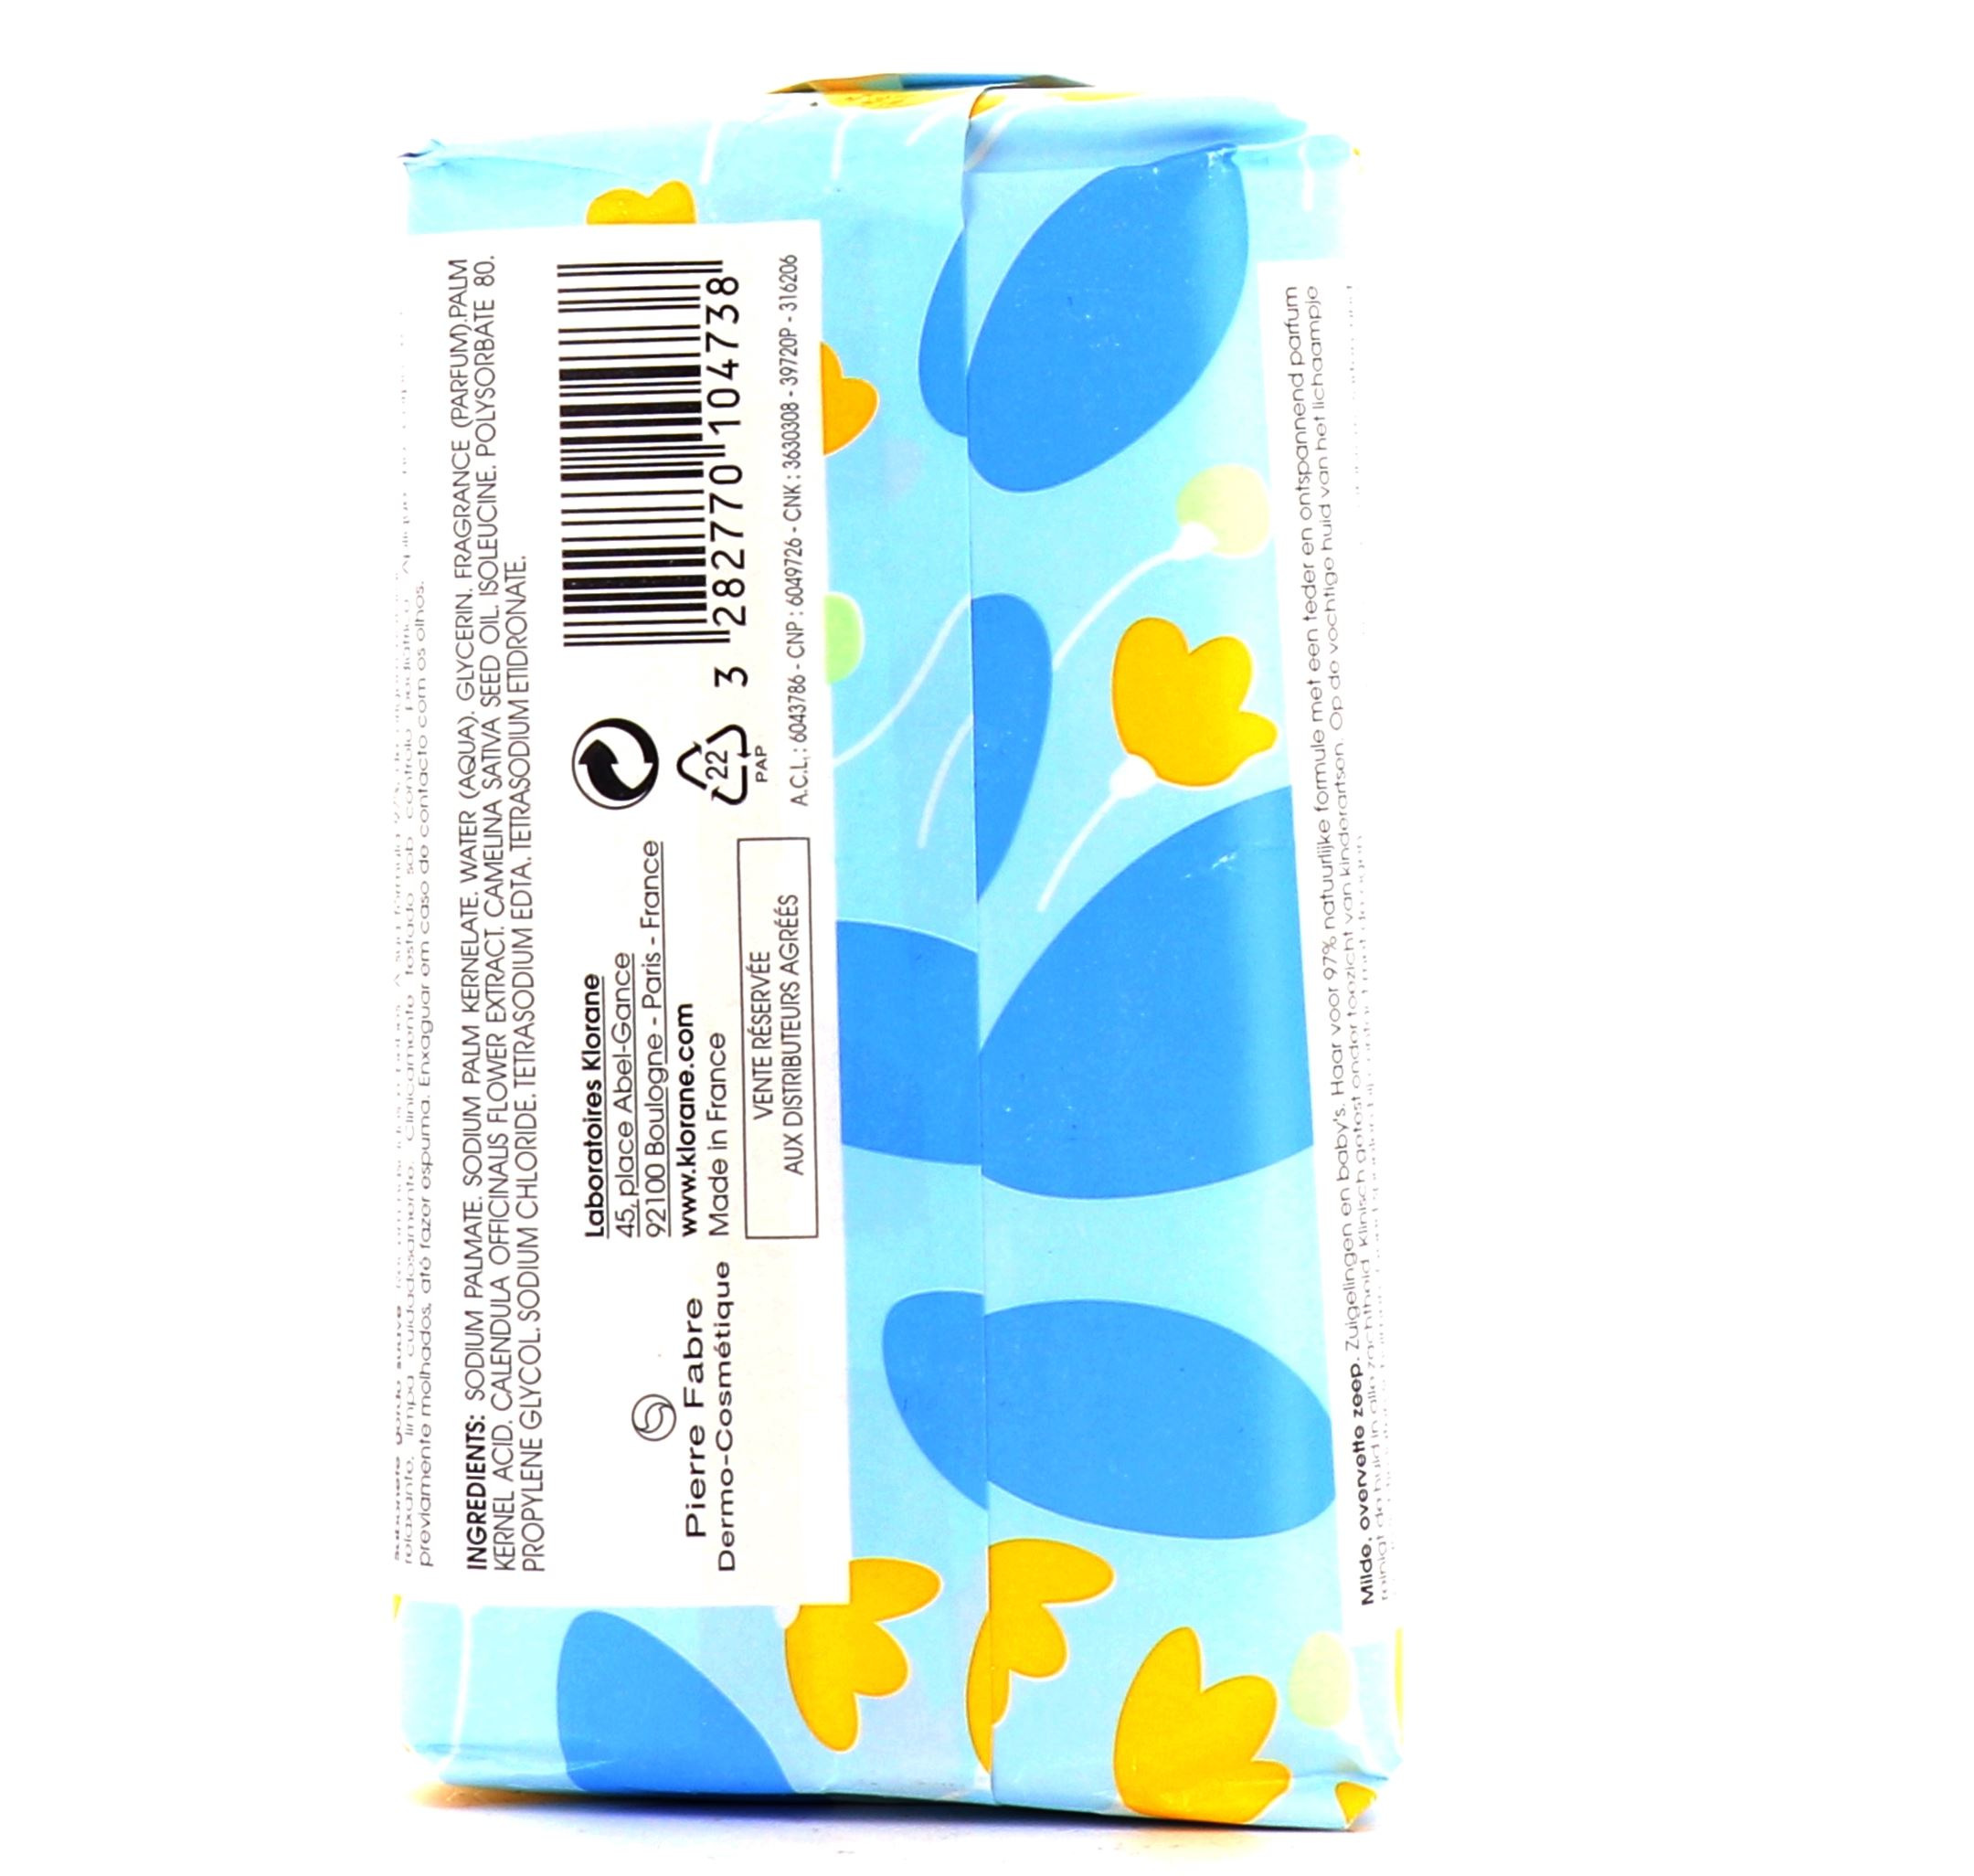 4-Pack IDOLE BABY SOAP with Glycerin & Vitamin E - 75g (each) SAVON BEBE  JABON